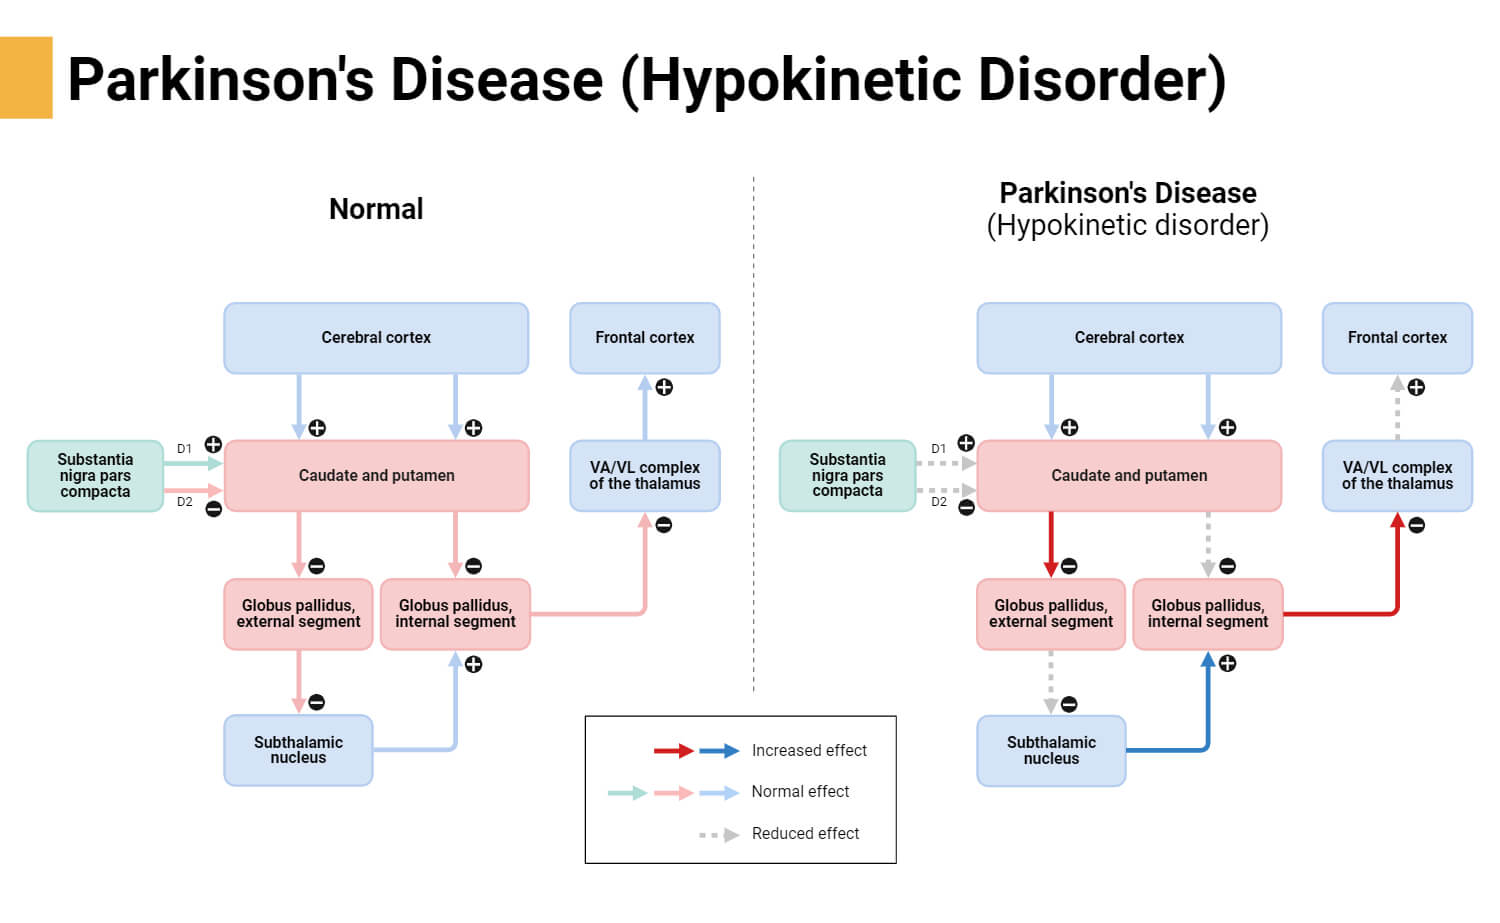 Parkinson's Disease (Hypokinetic Disorder)